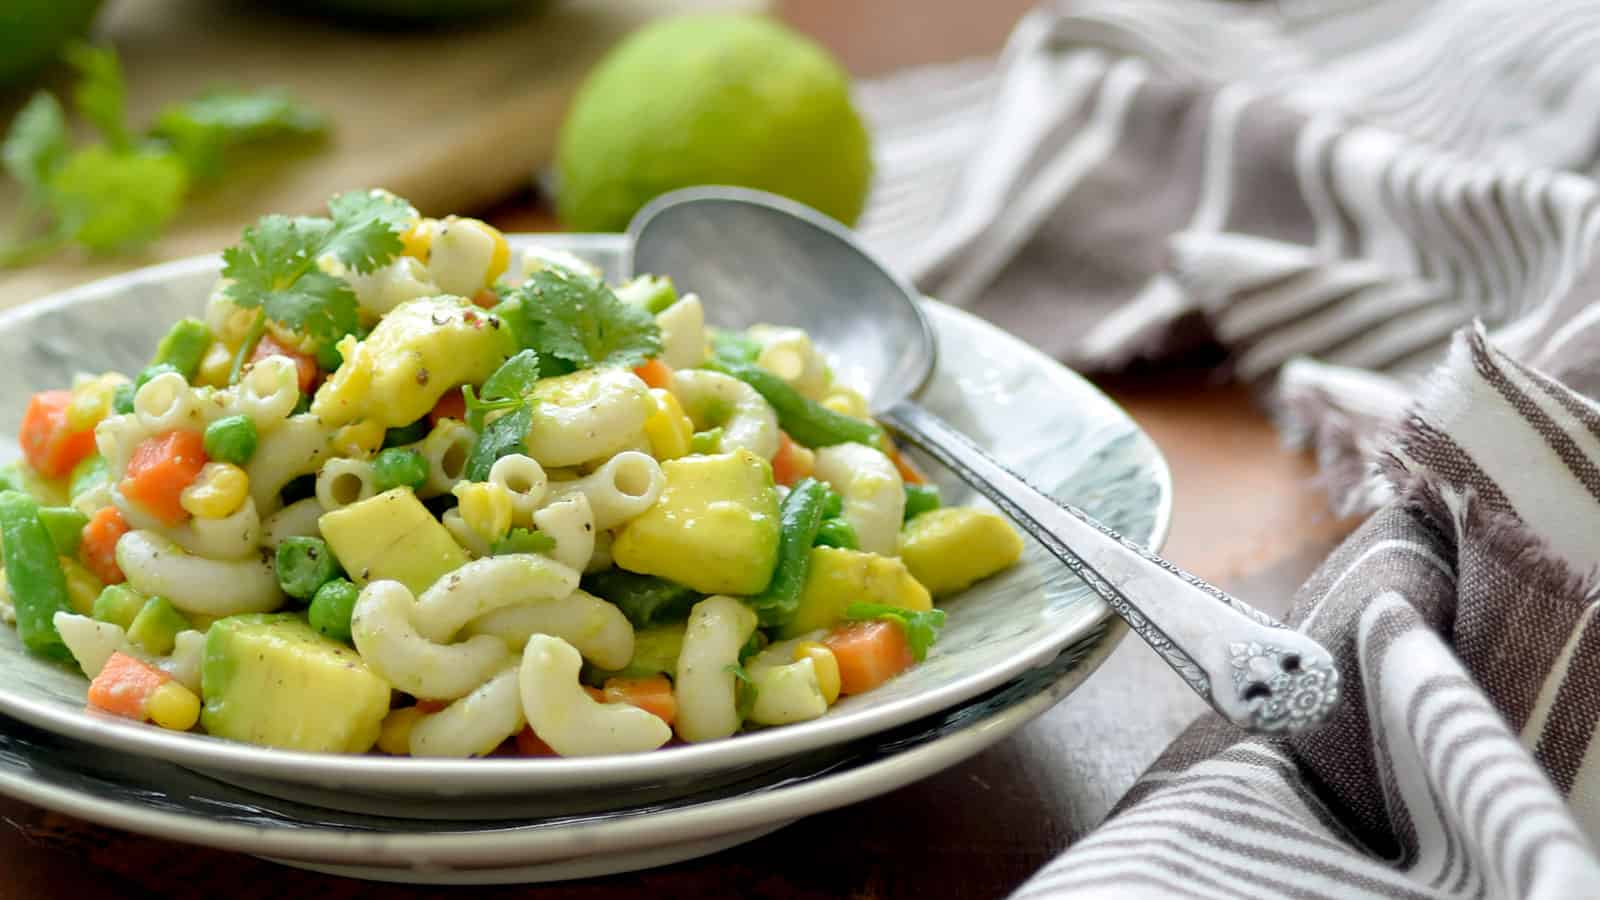 Vegan pasta salad with avocado.